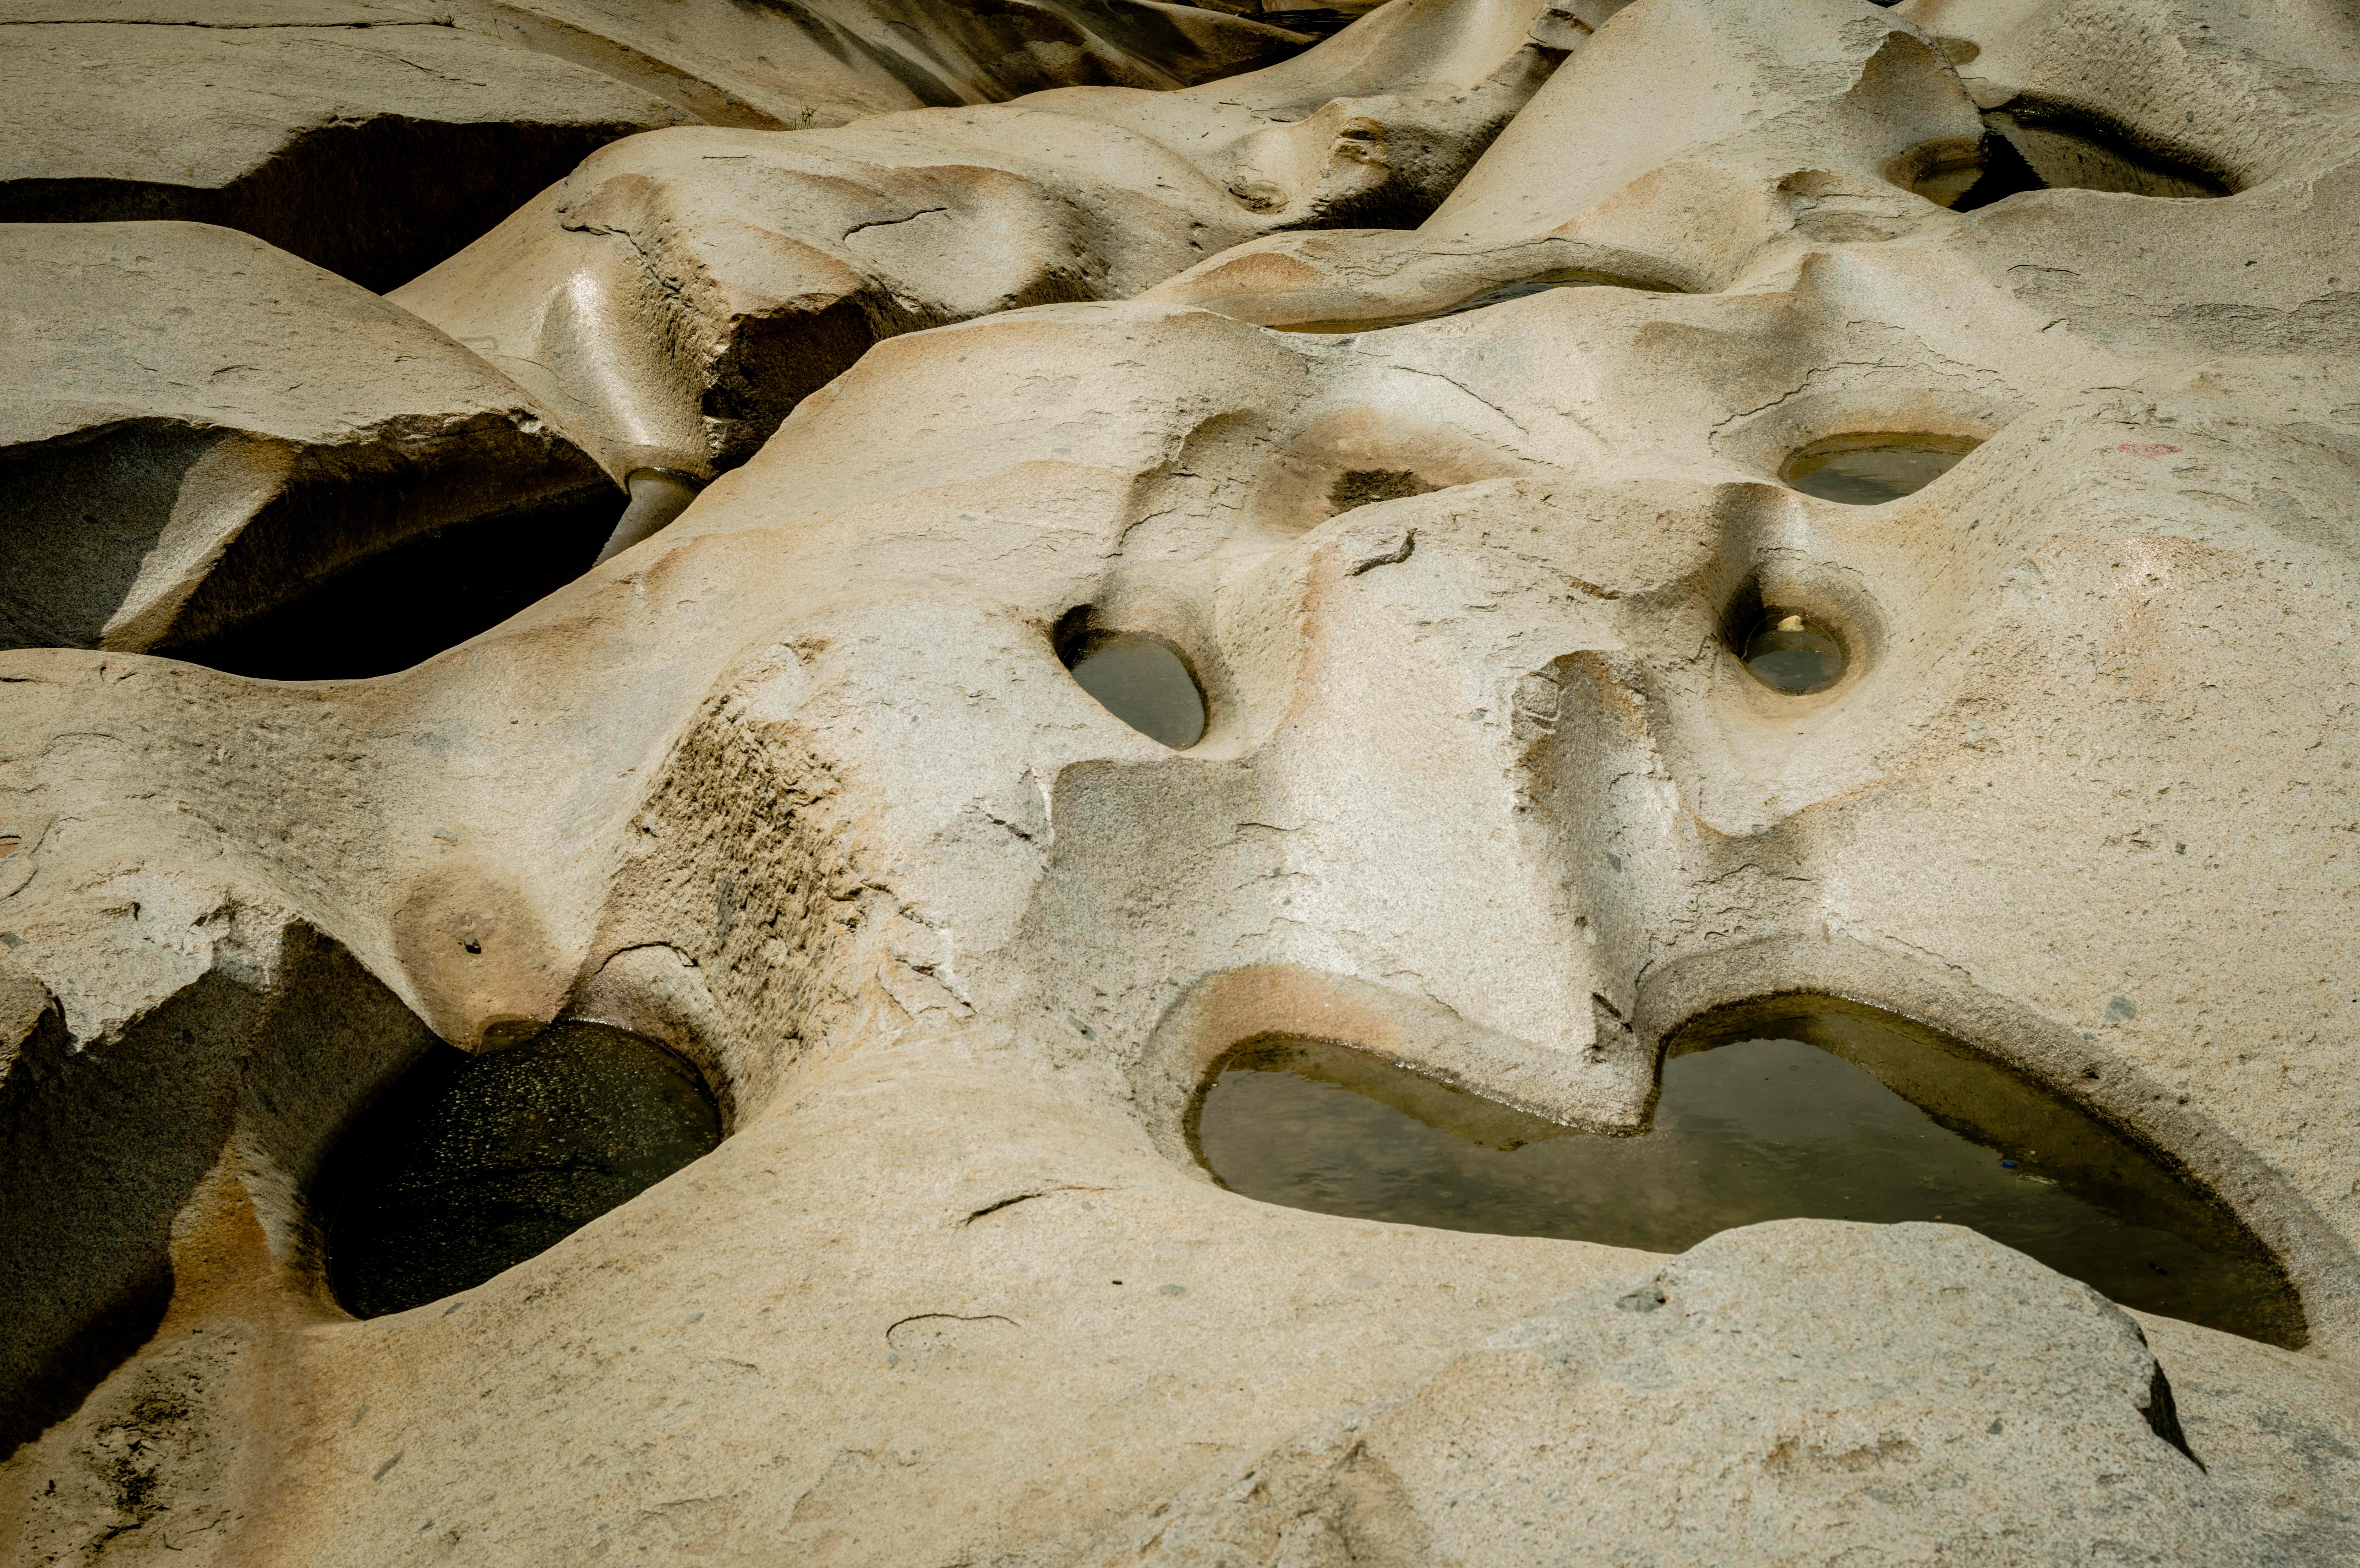 Mauricio Velez Landscape Photograph - Untitled VI, Abstract rocks landscape color limited edition photograph 